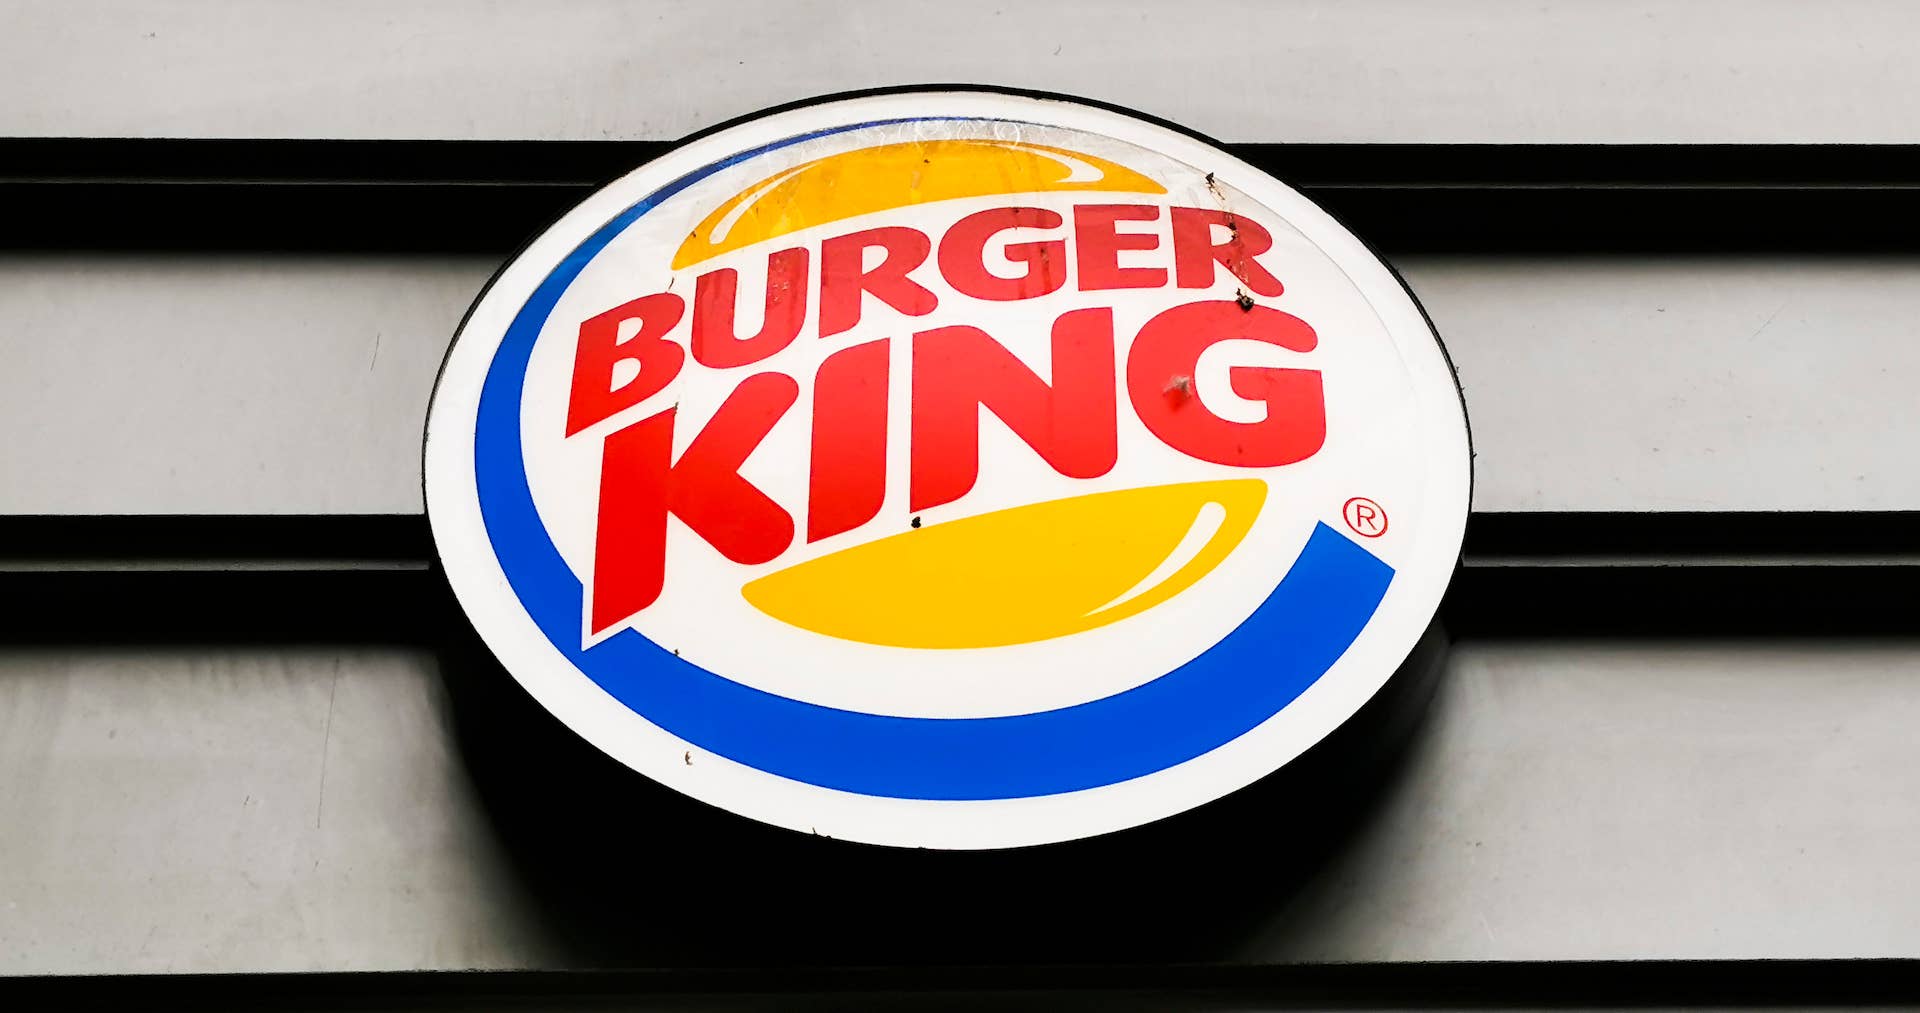 19-year-old fatally shot while working at NYC Burger King